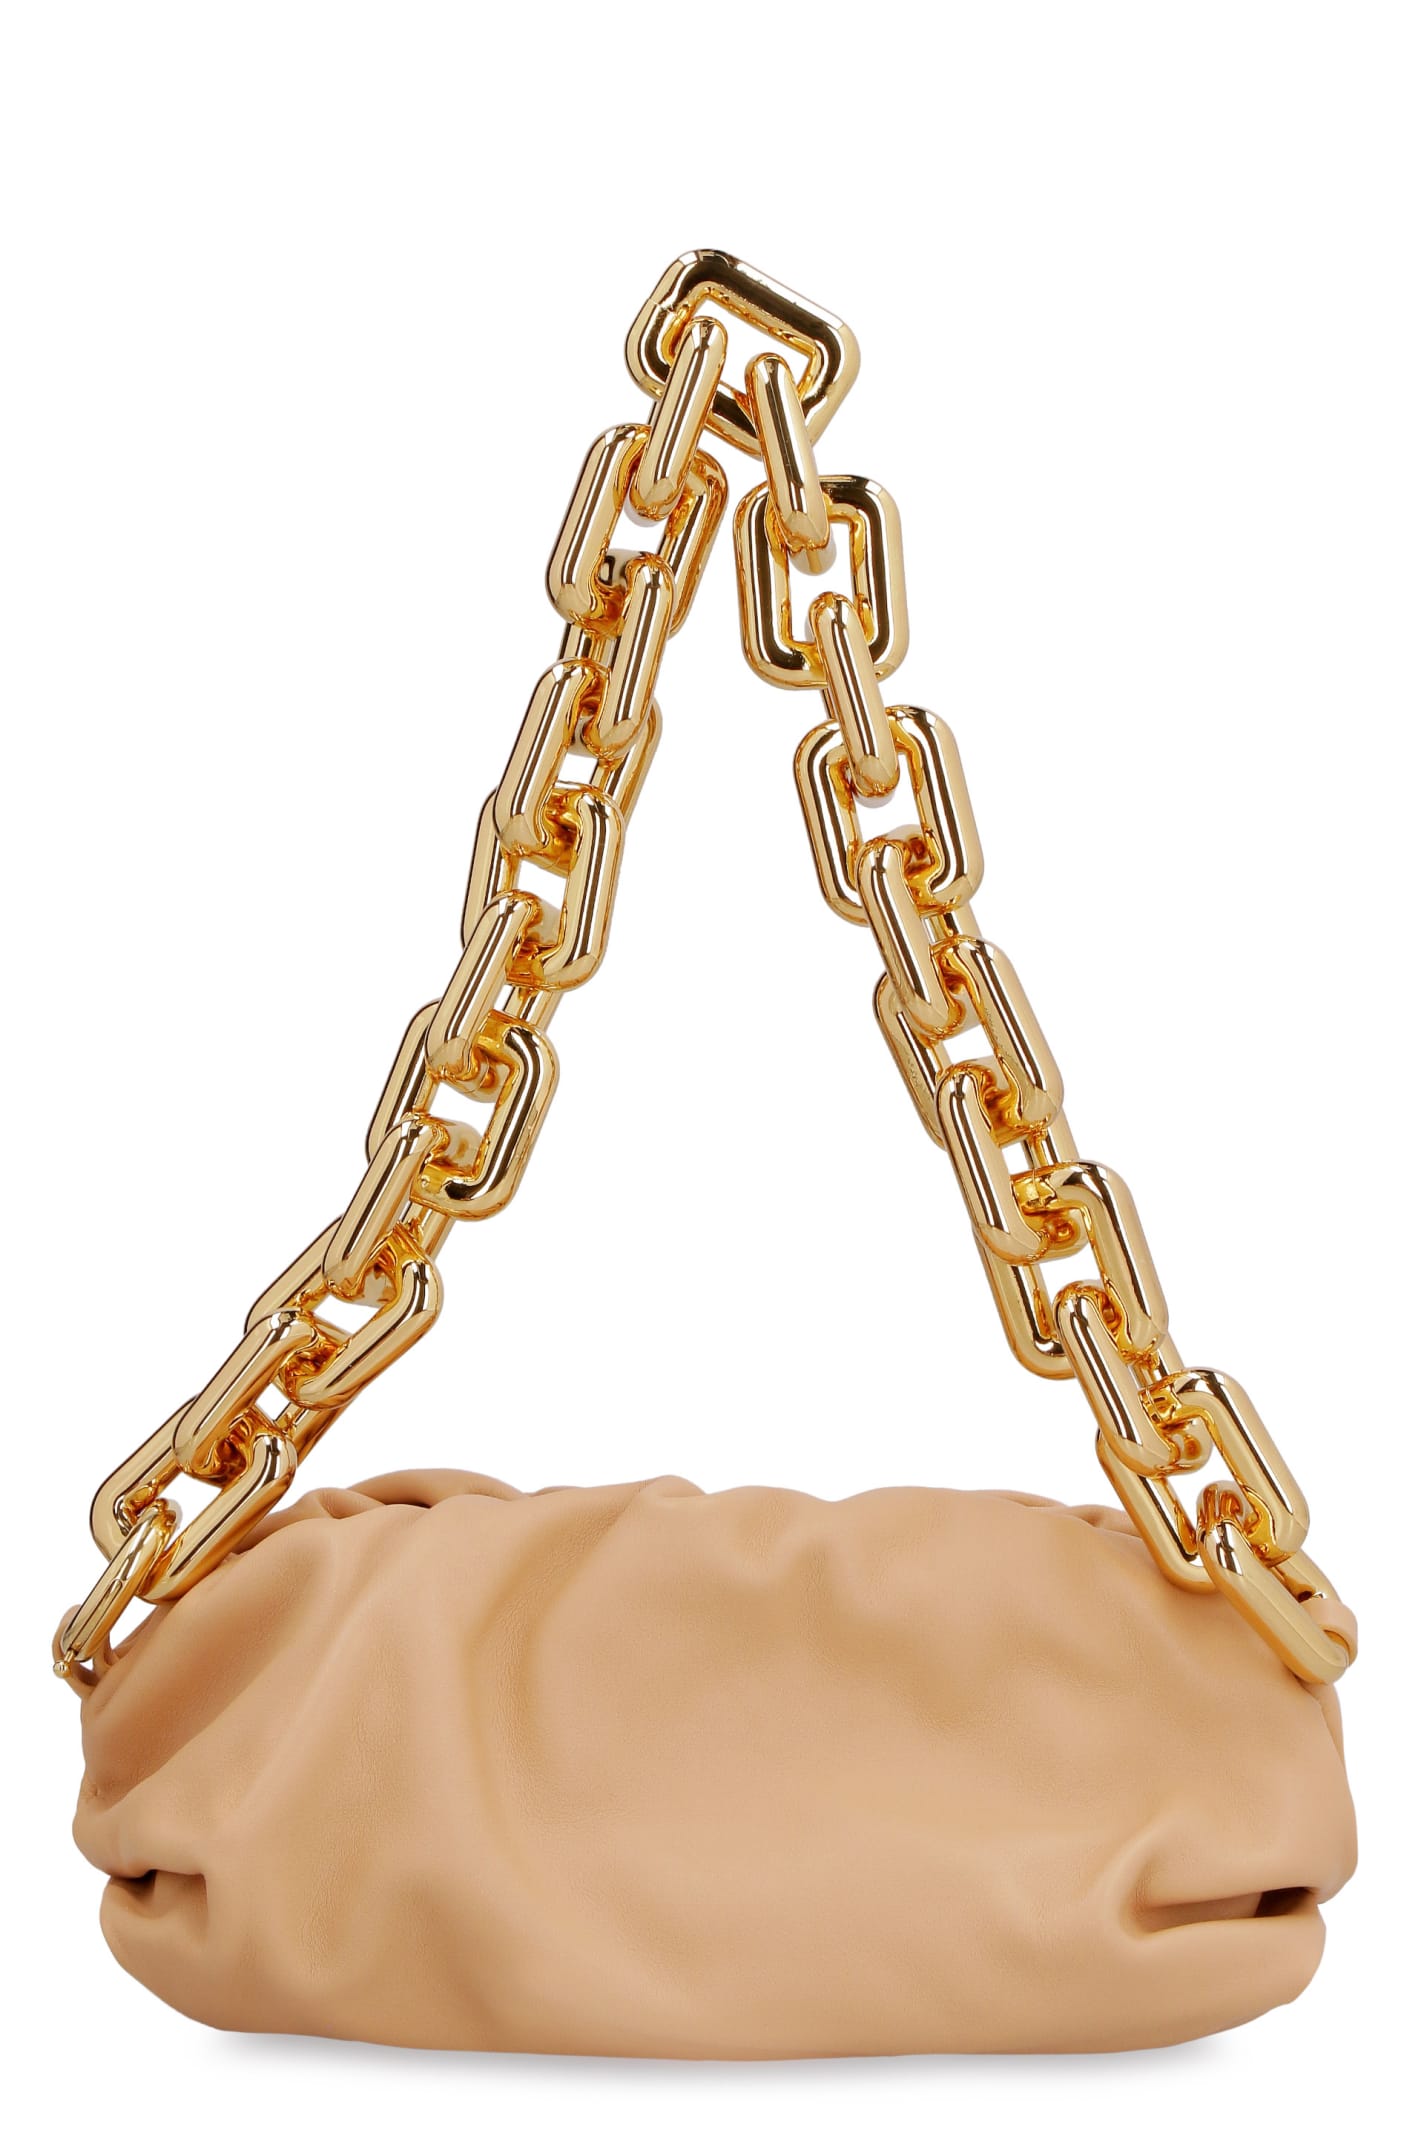 Bottega Veneta Teen Chain Leather Handbag